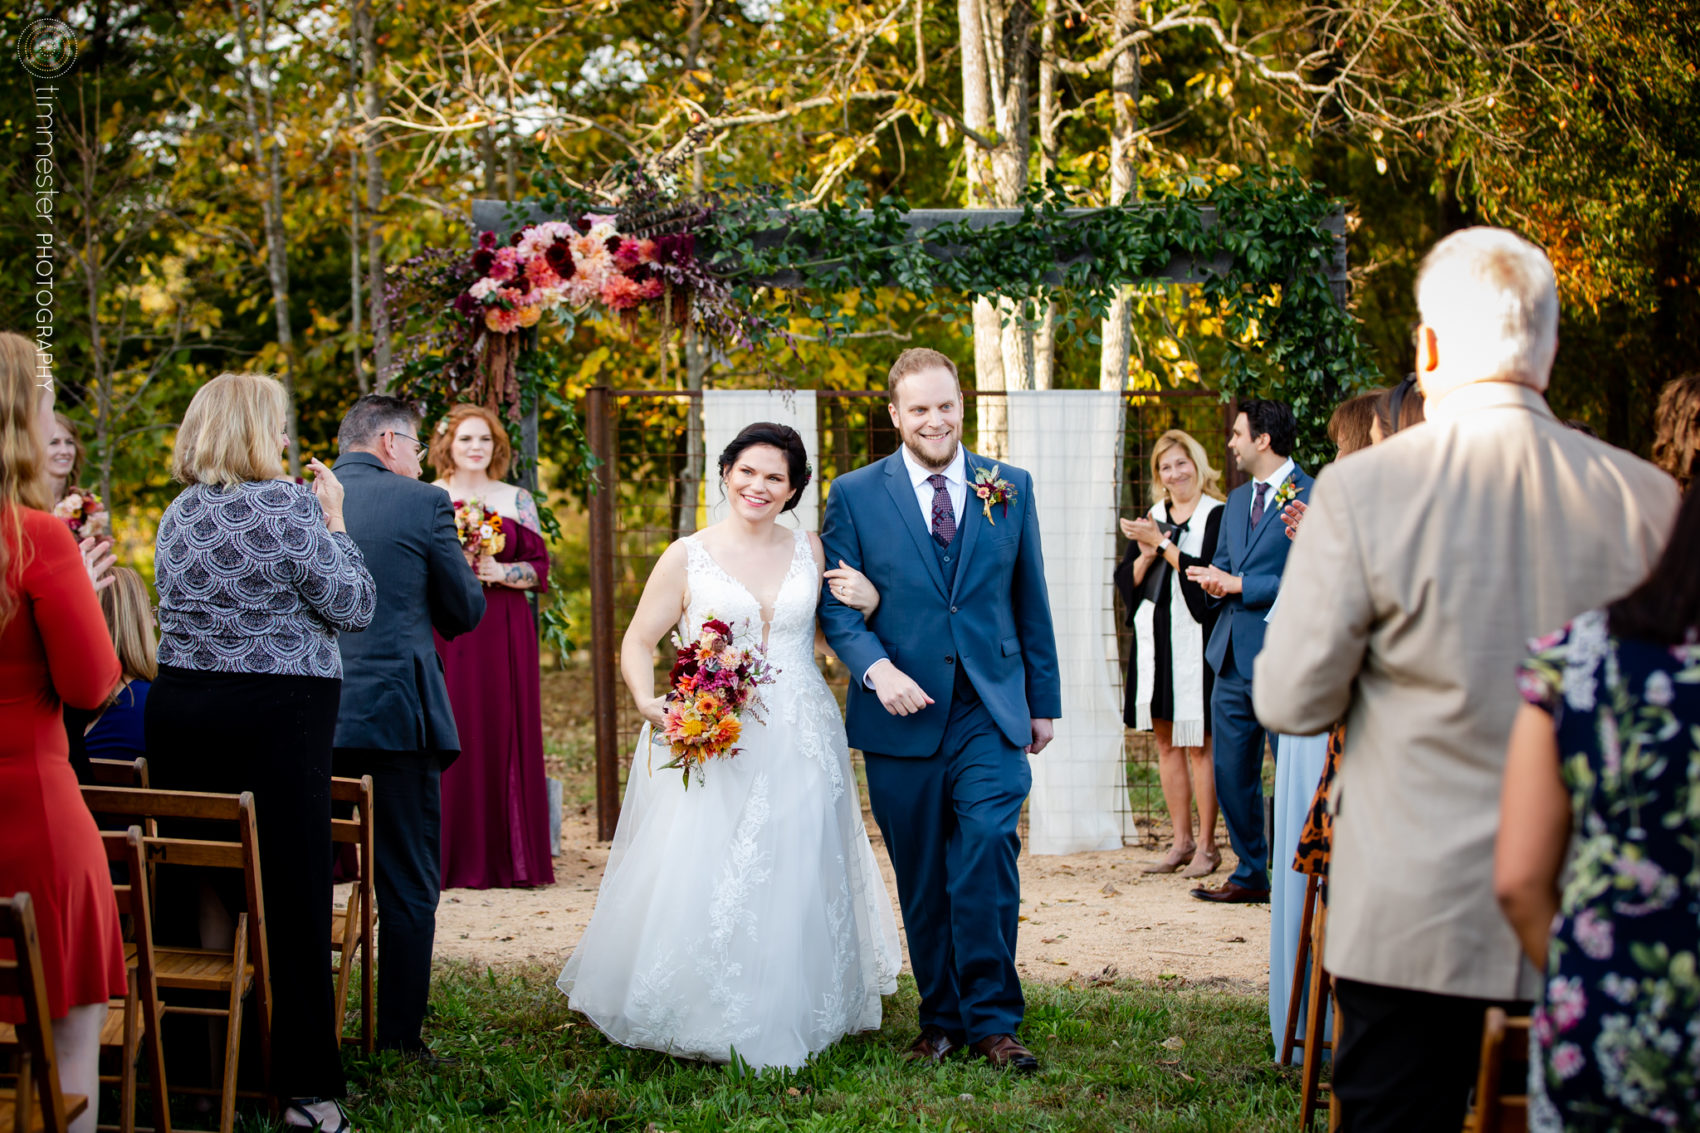 A Sassafras Fork Farm wedding, using their outdoor ceremony site in the autumn.